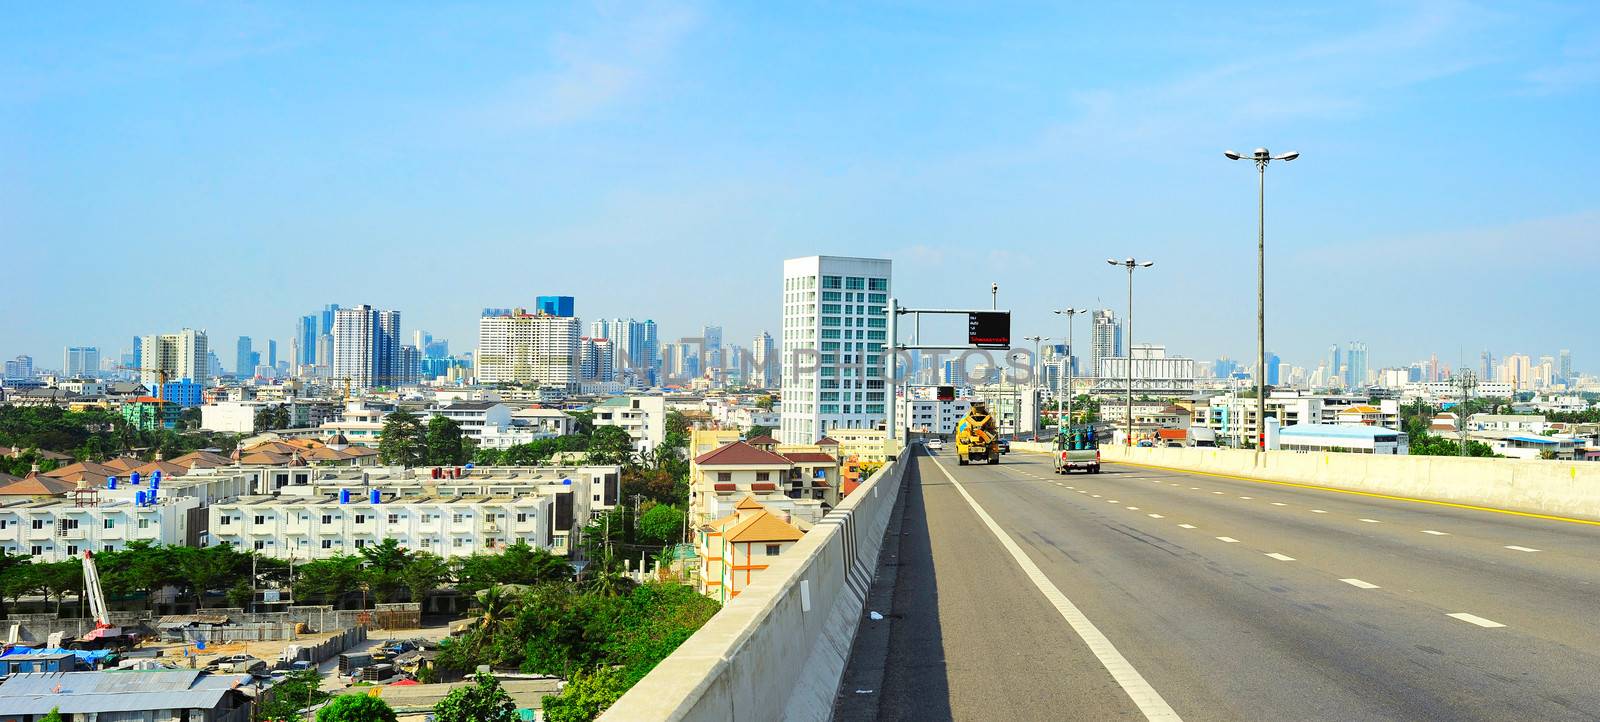  Bangkok highway by joyfull